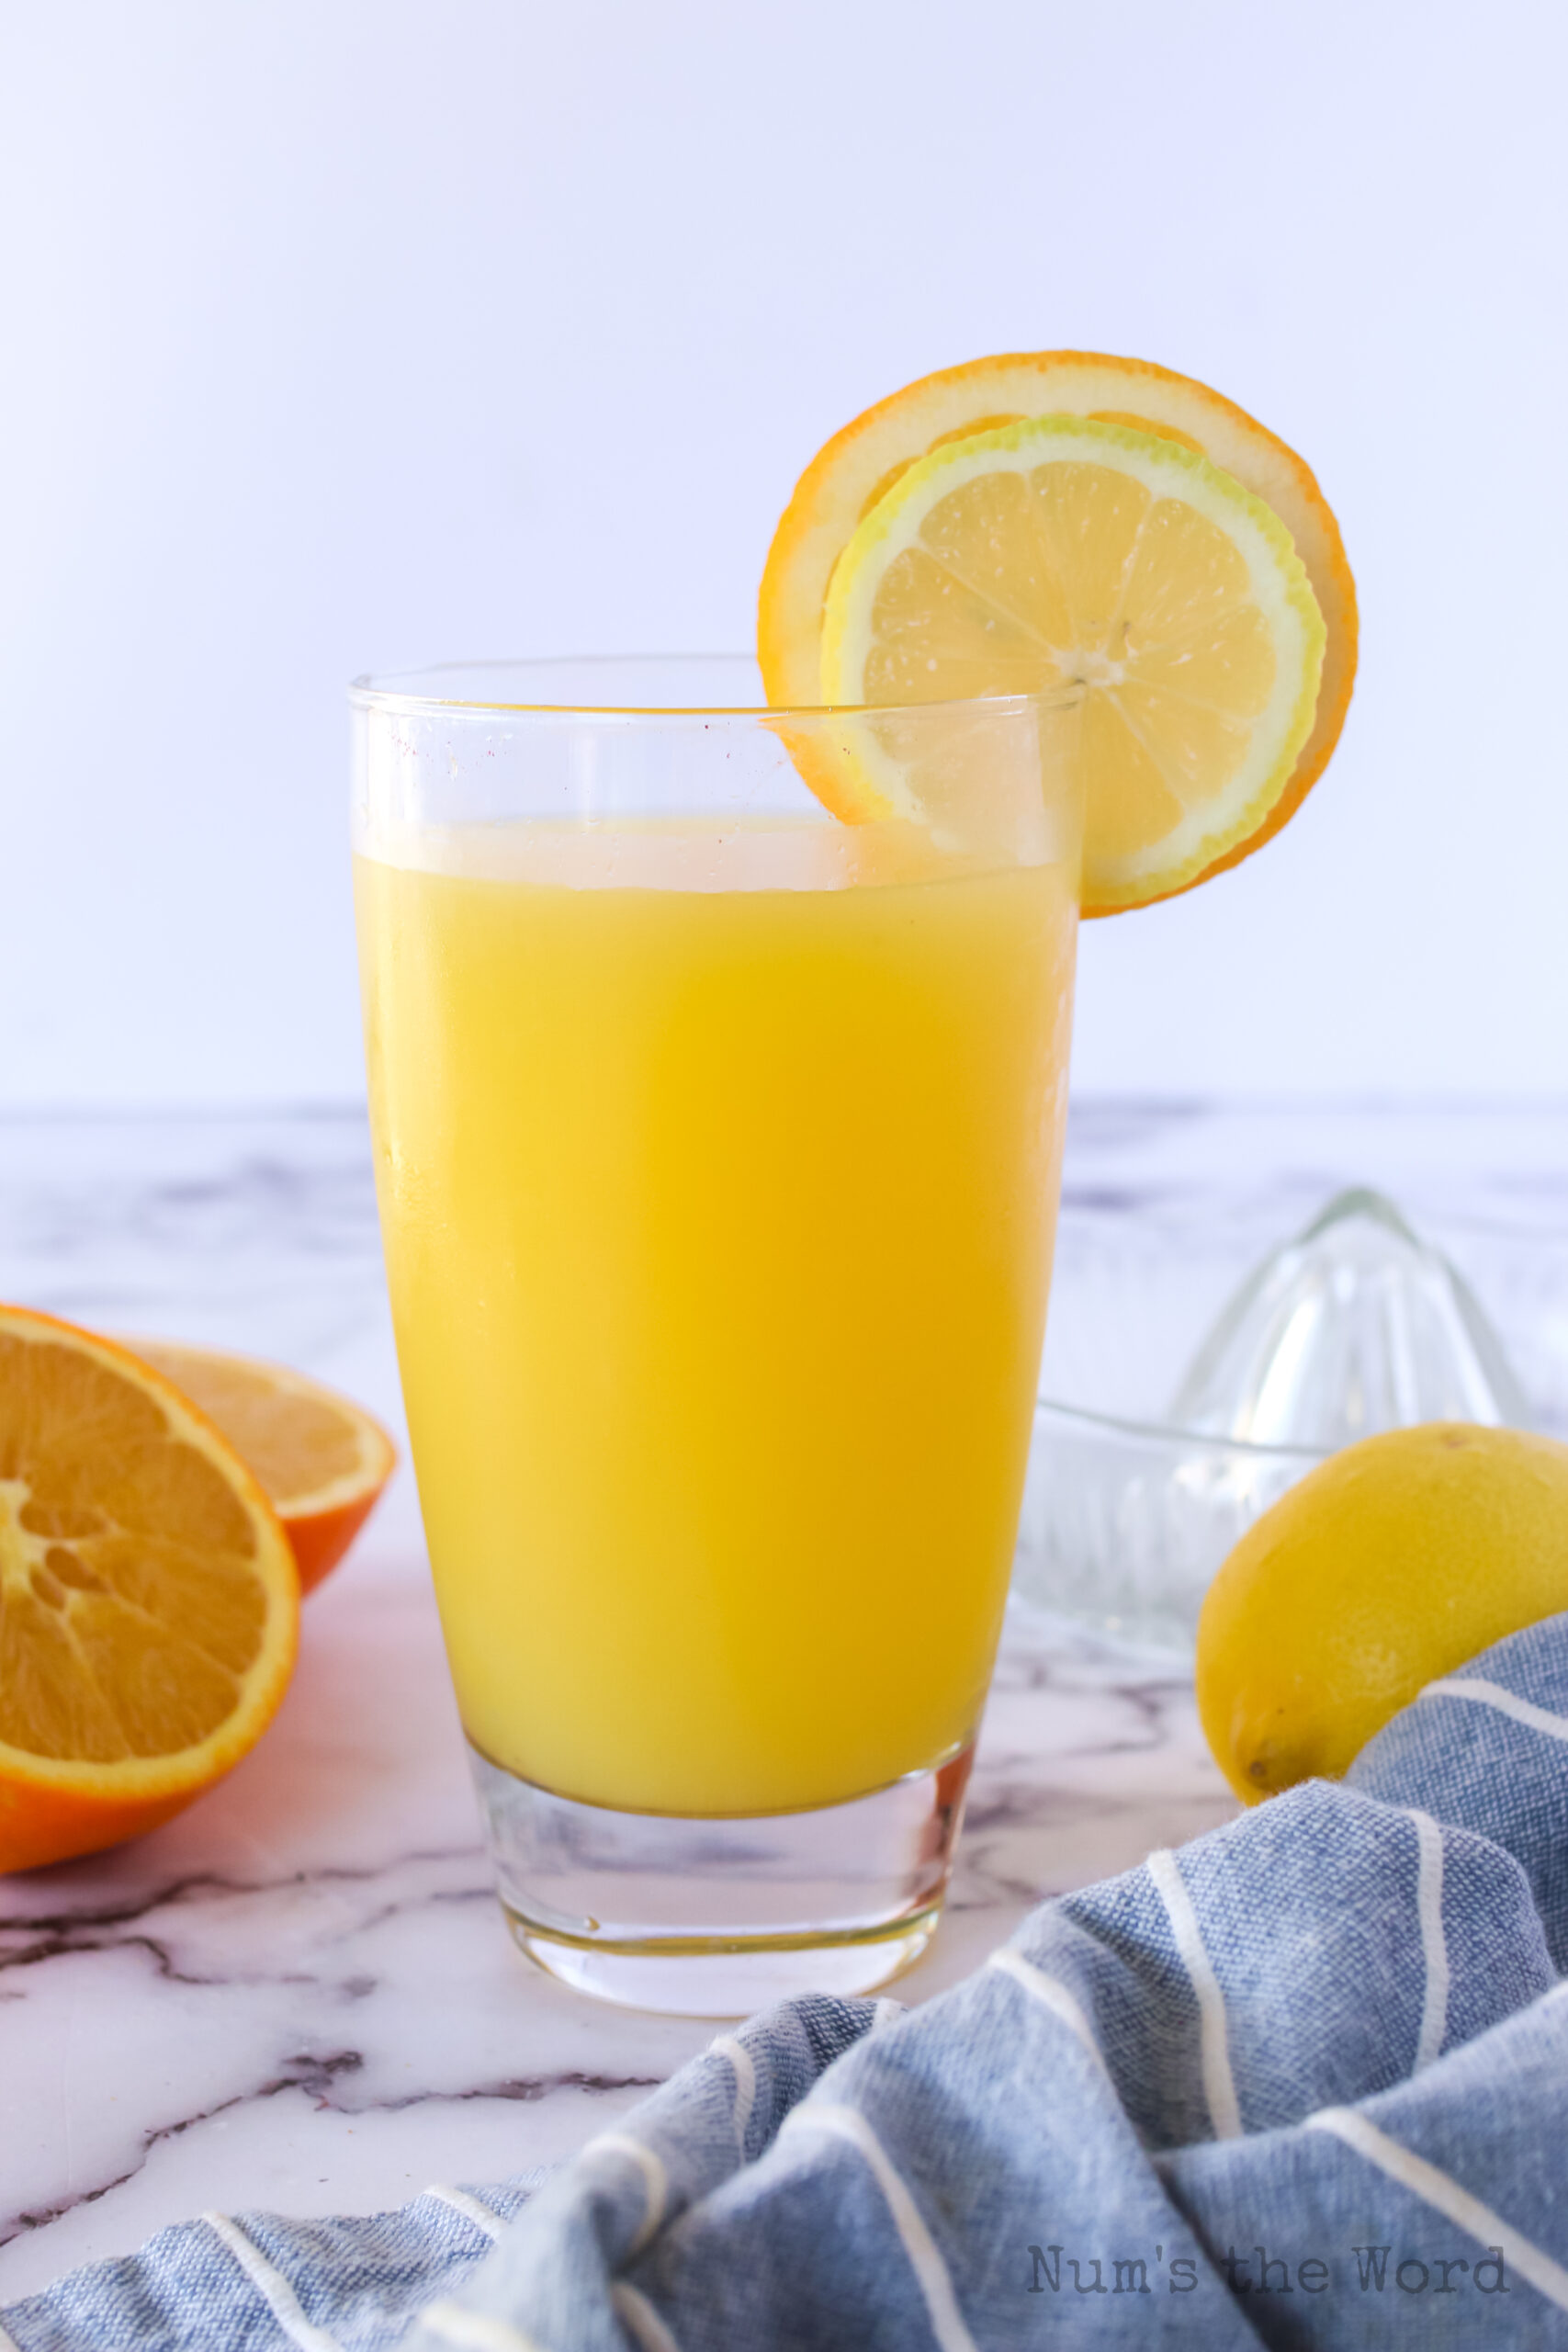 zoomed out image of glass of orange lemonade with a slice of orange and slice of lemon on the edge.